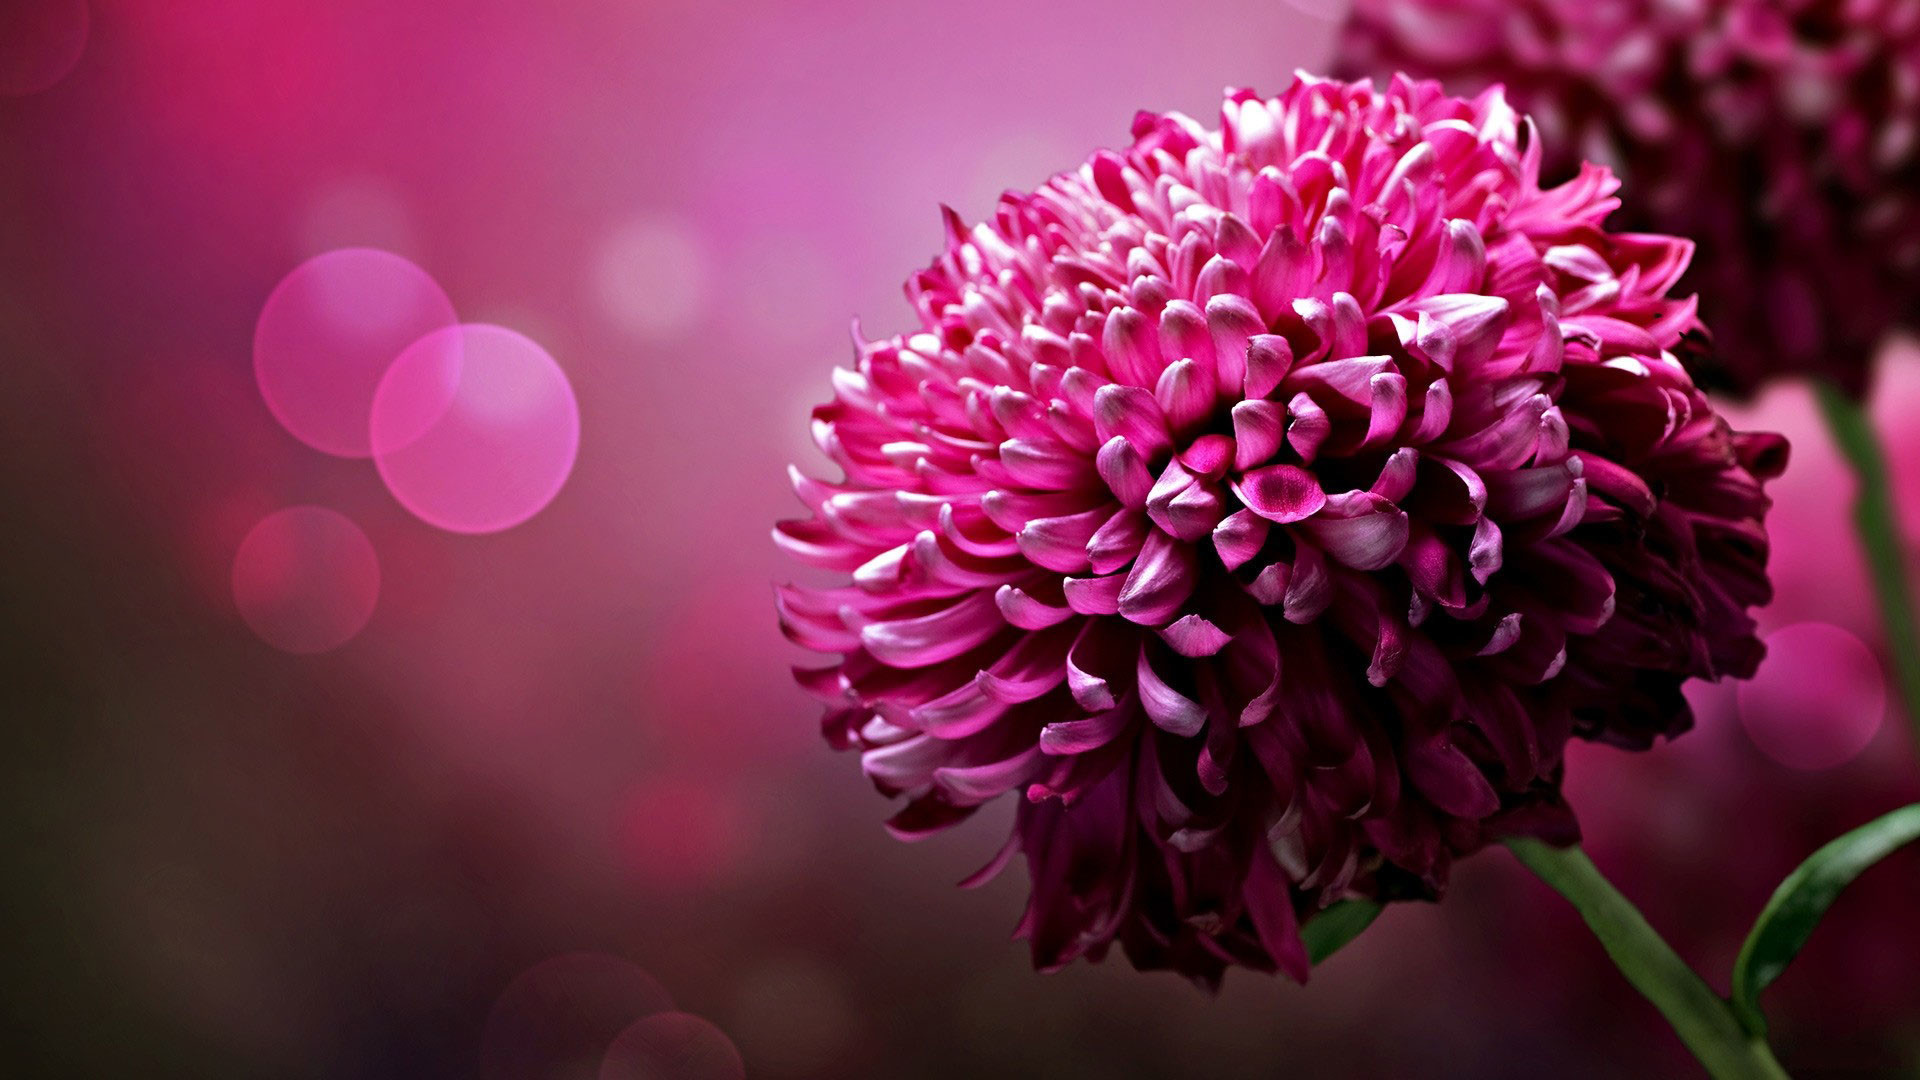 1920x1080 ... flowers cute dark pink desktop background wallpaper 1080p hd image ...